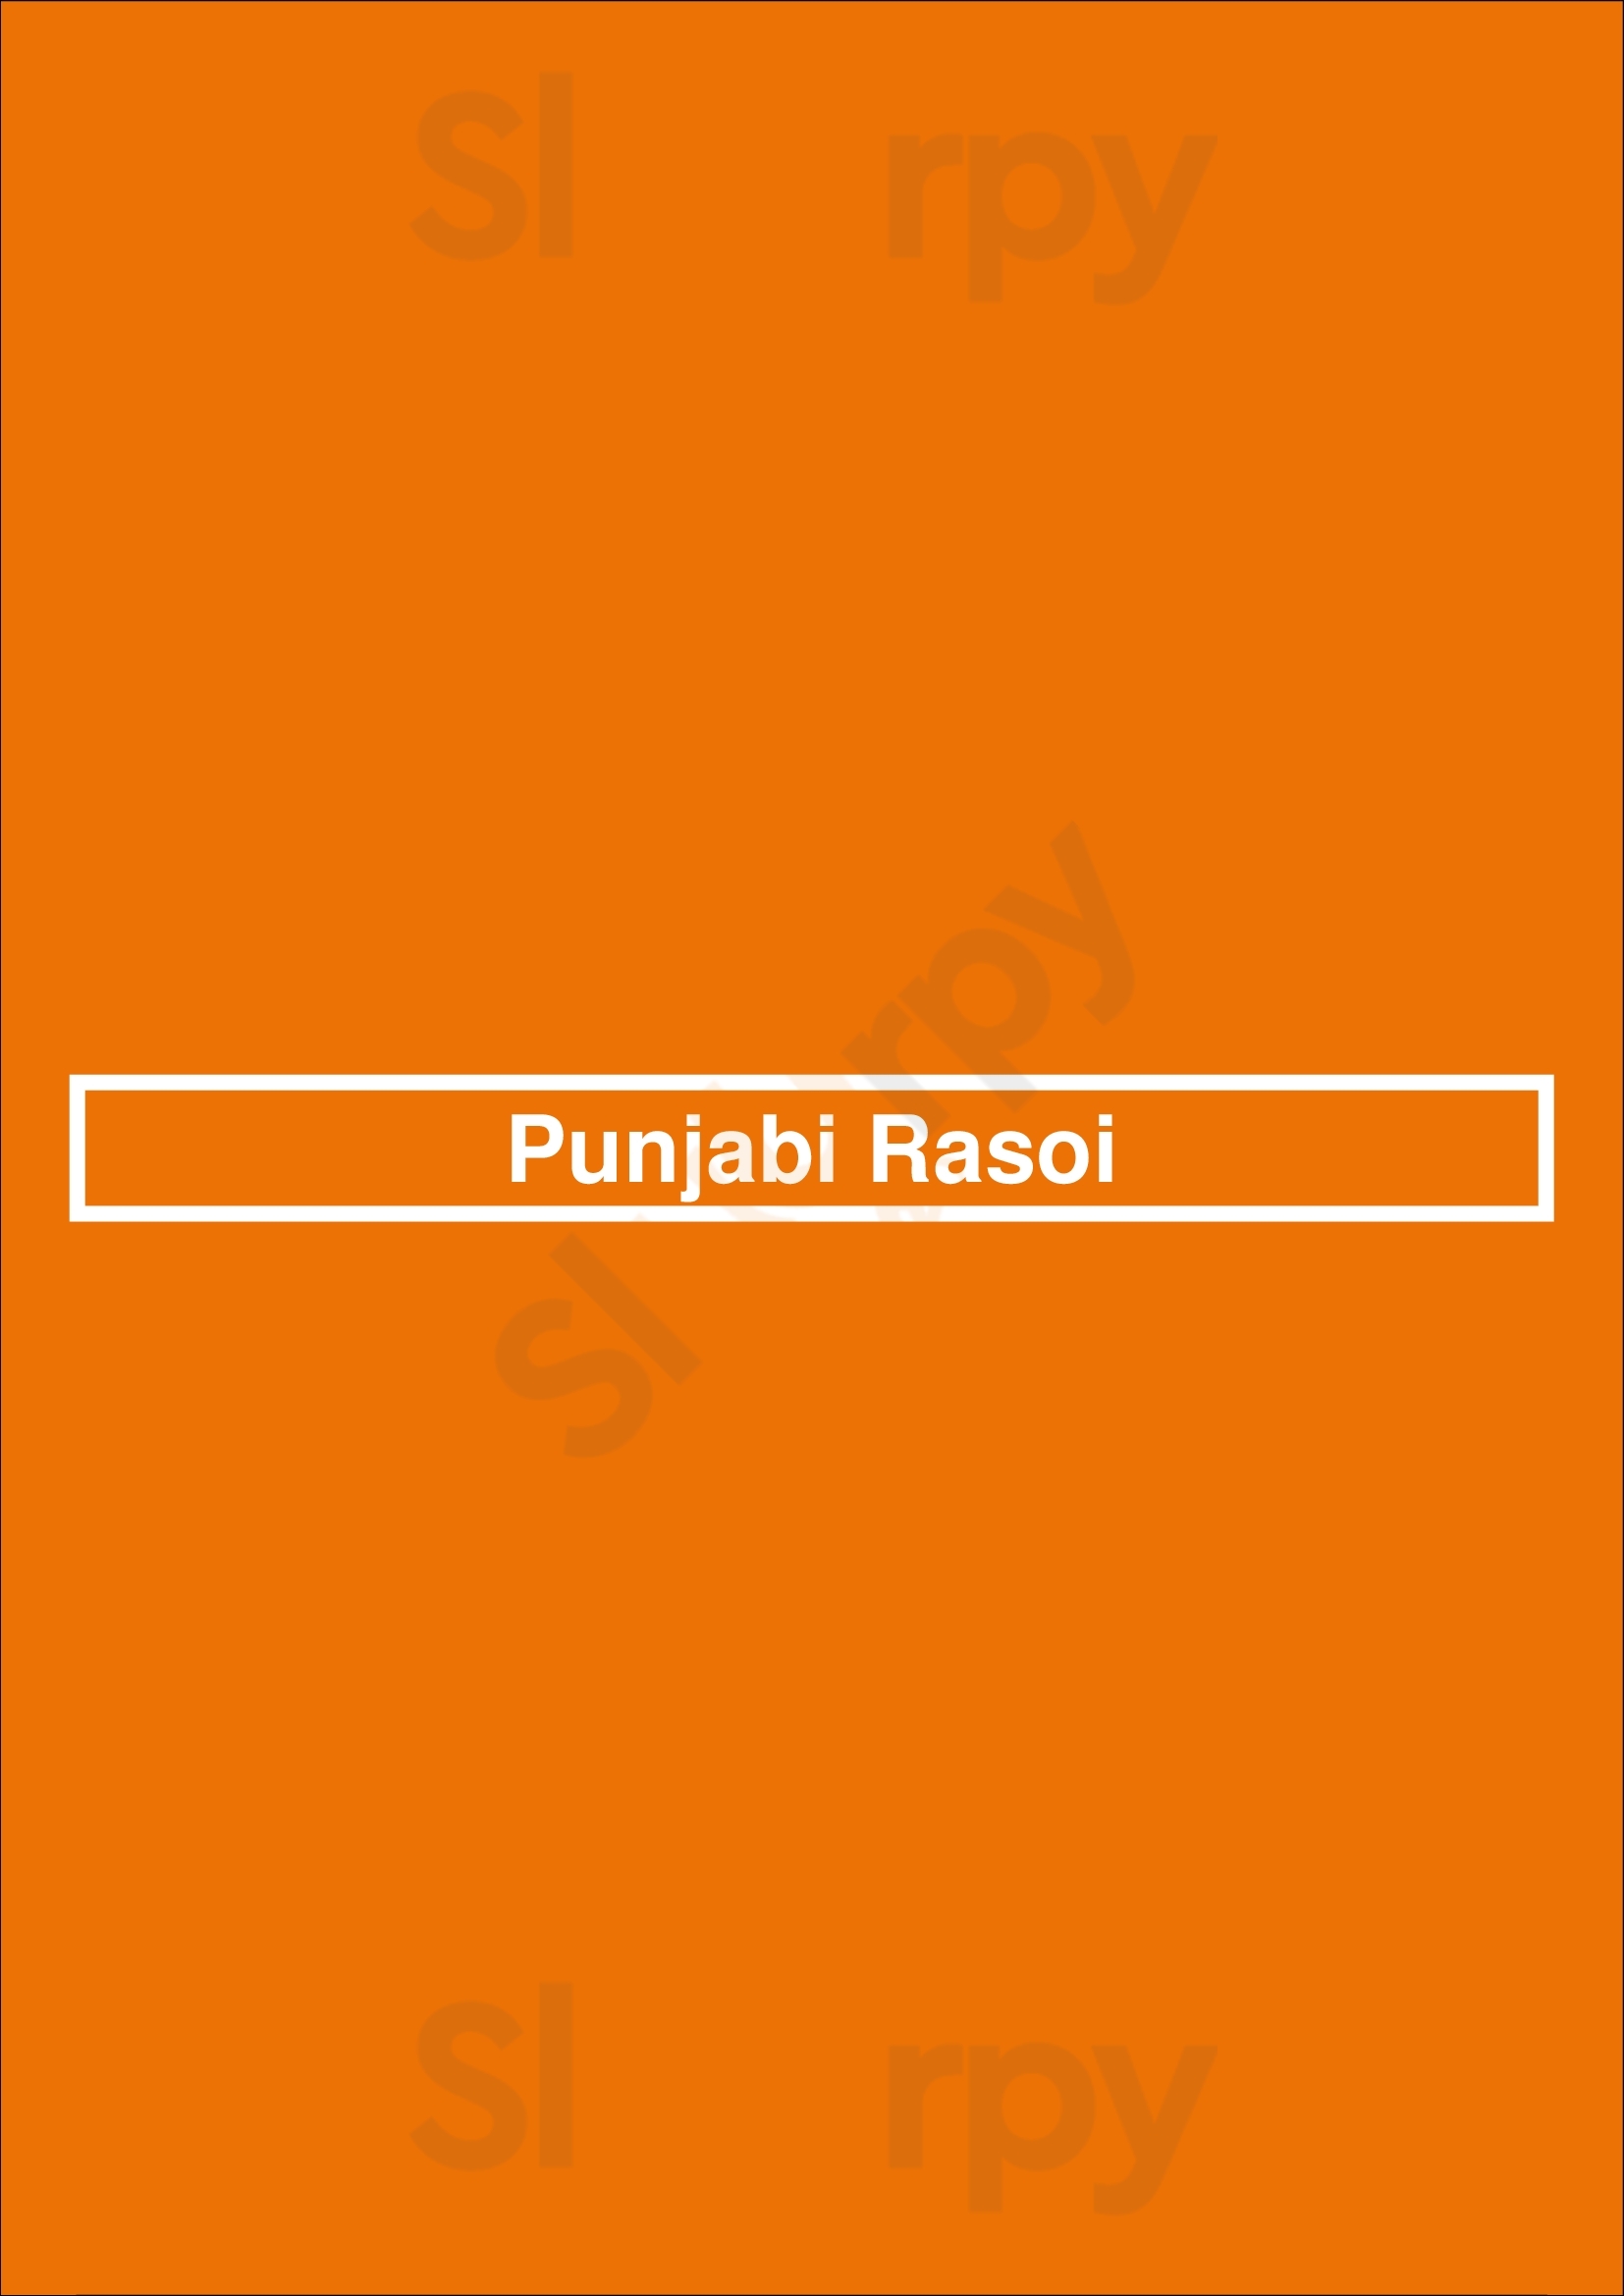 Punjabi Rasoi London Menu - 1